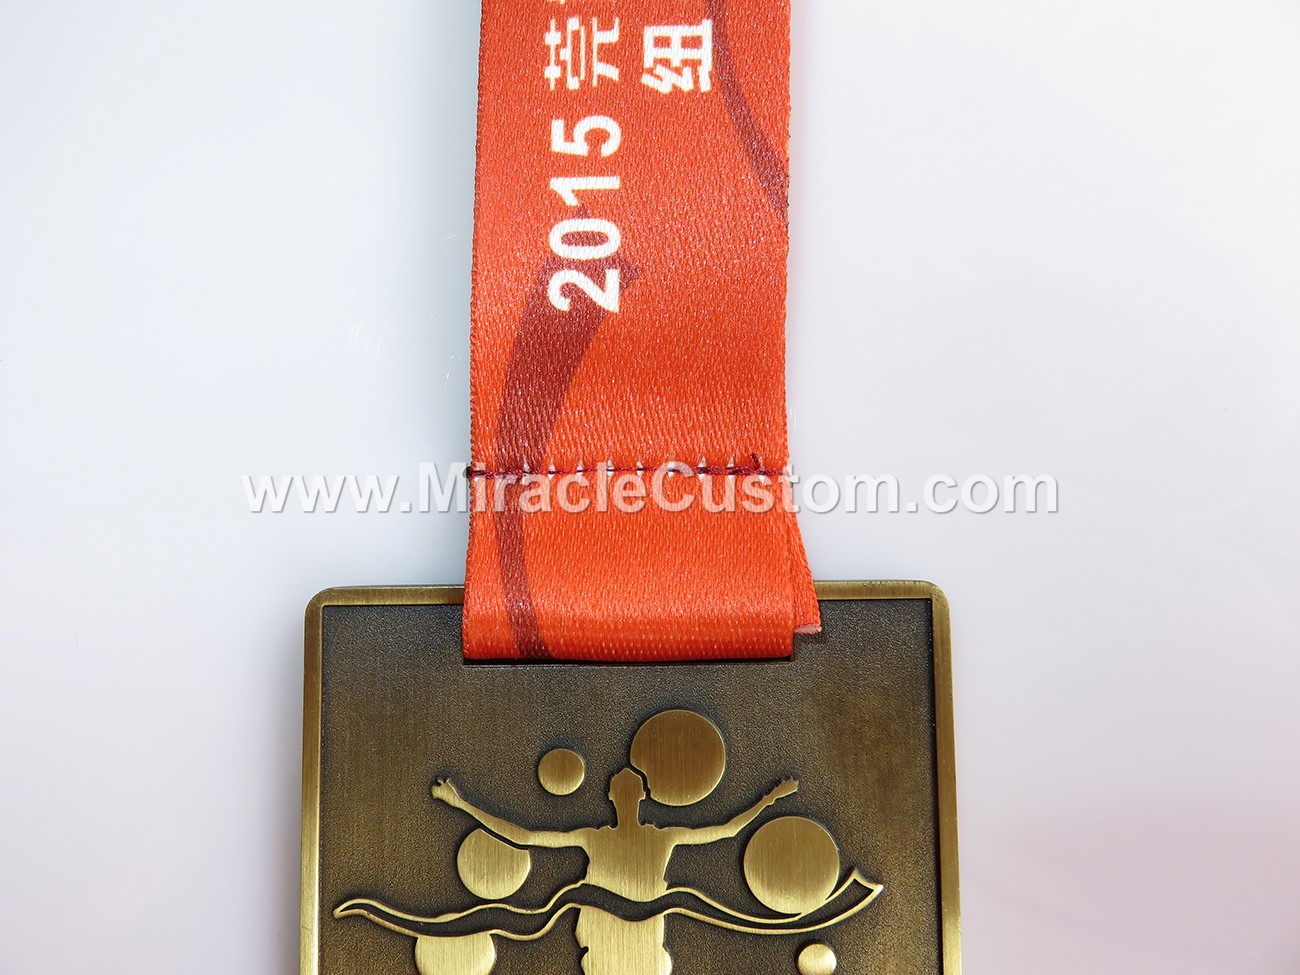 long distance race medals